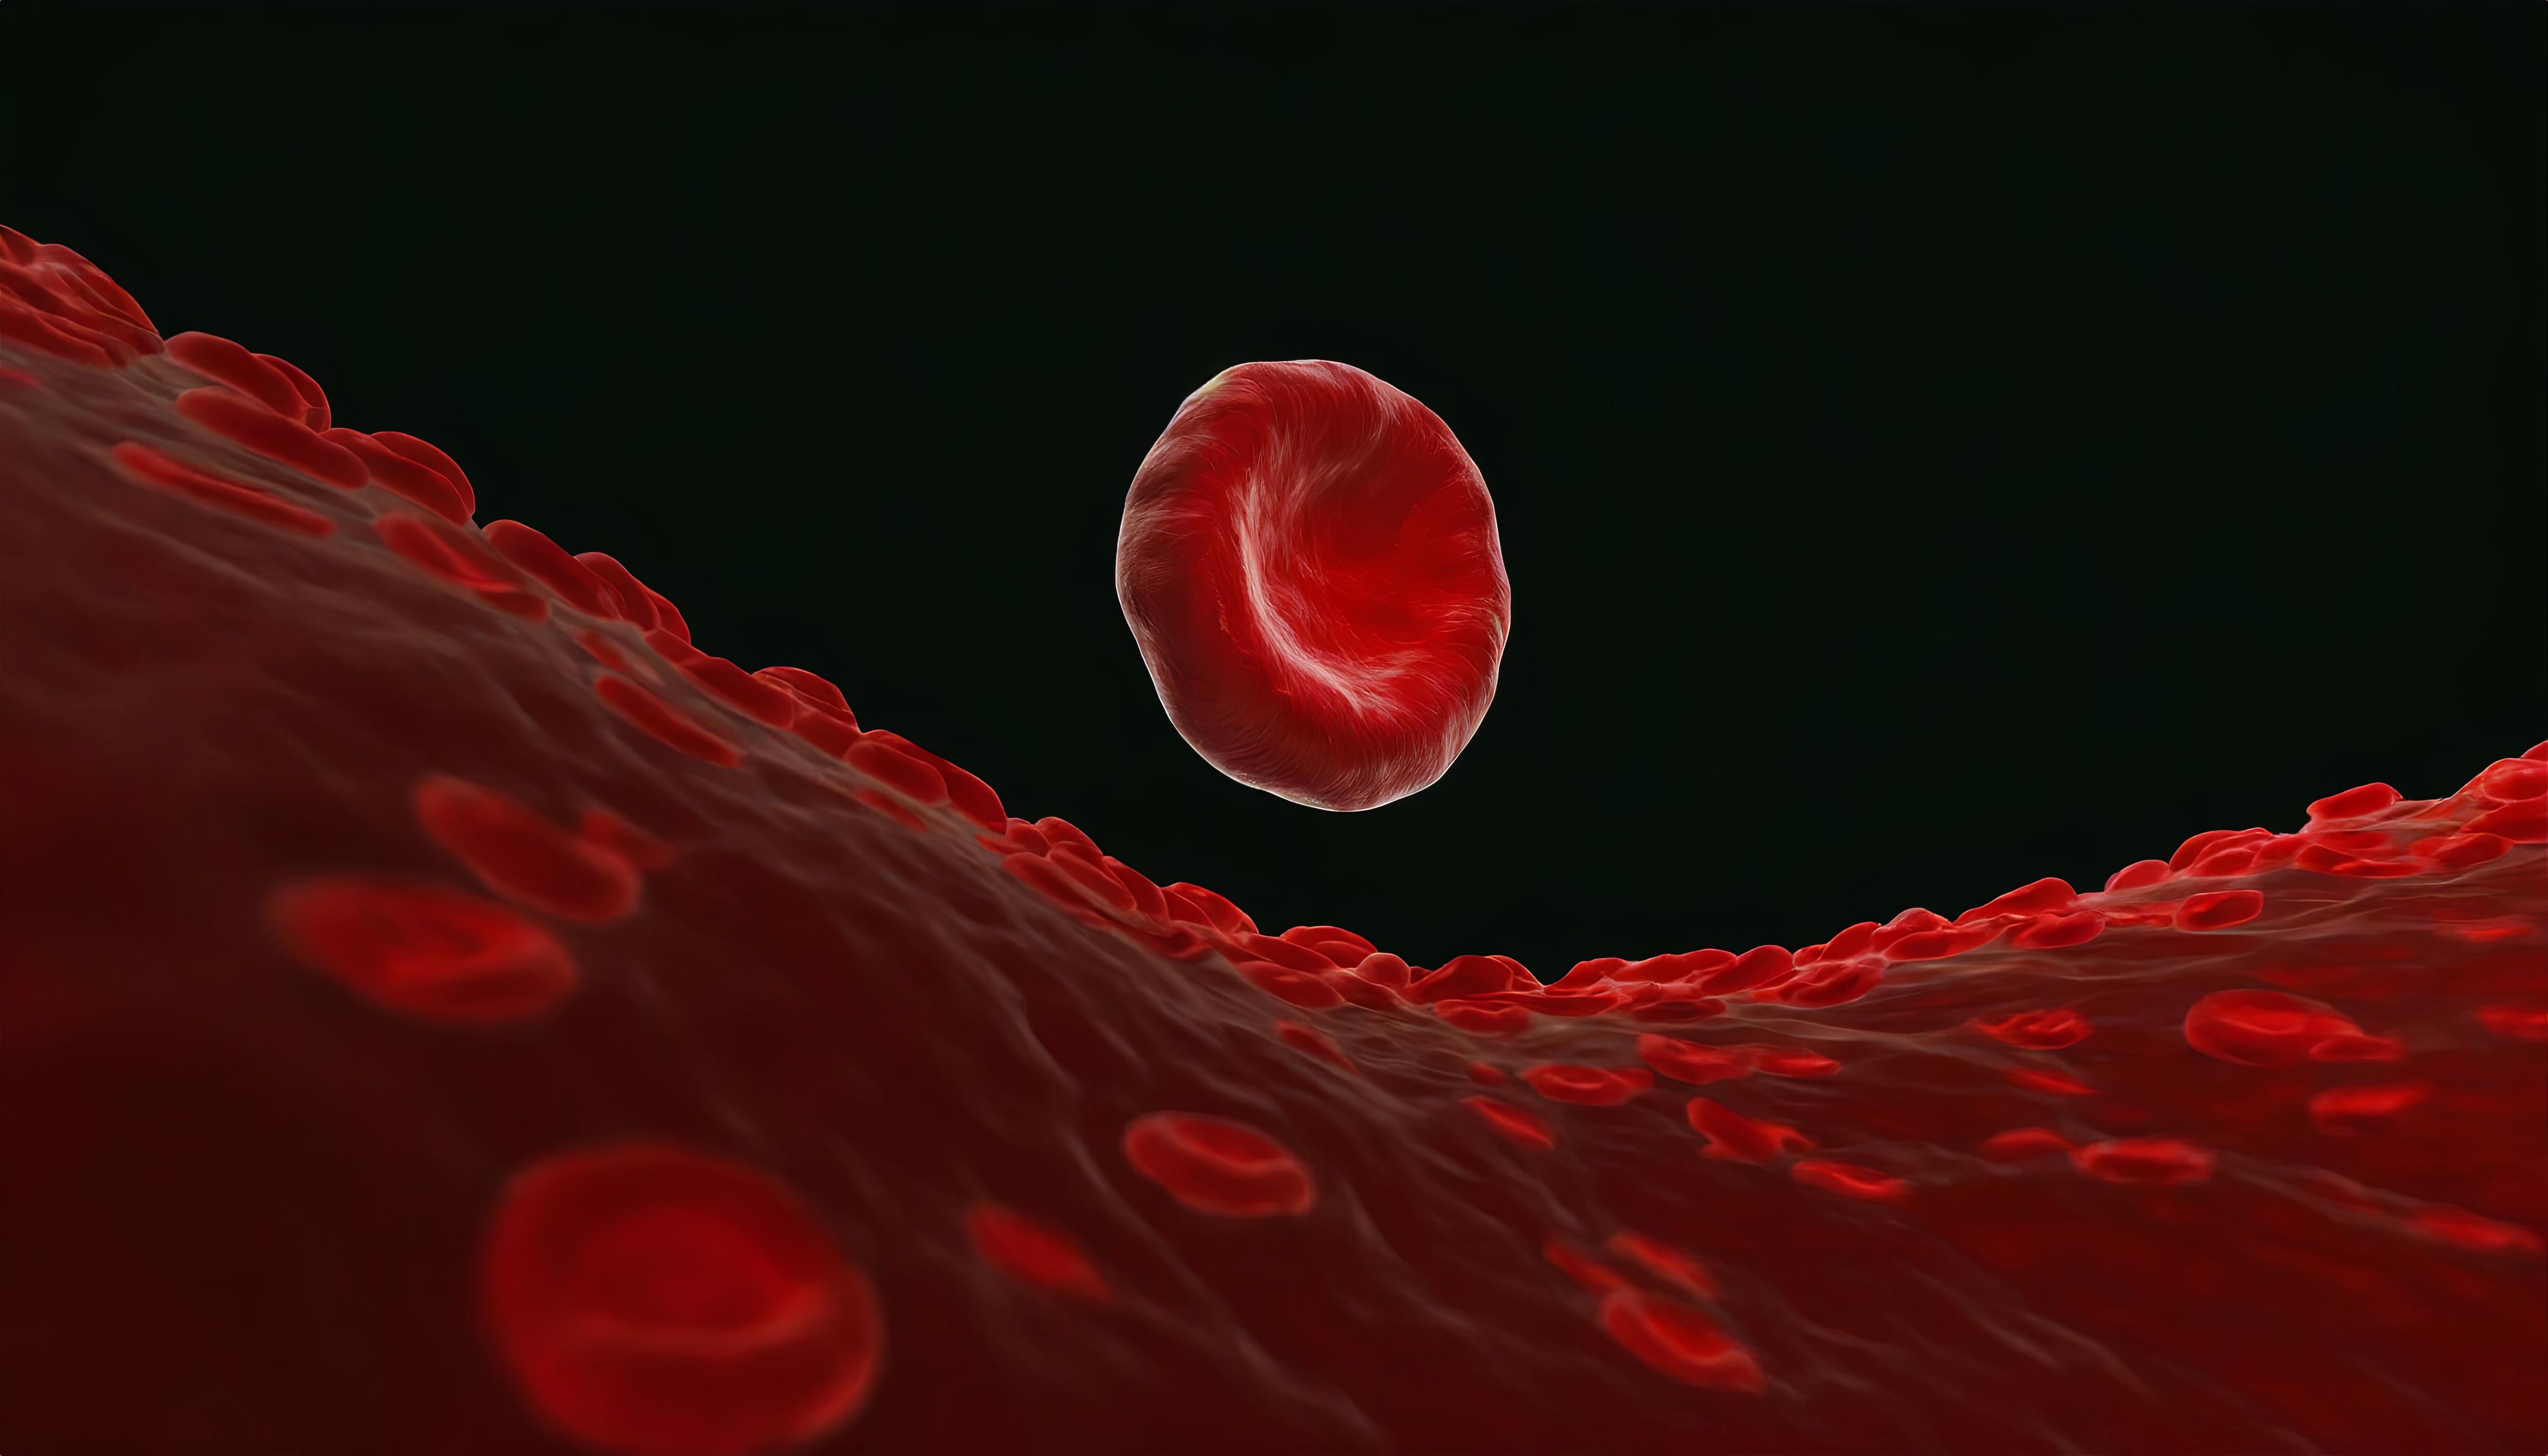 Hemolysis is the destruction of red blood cells, a common symptom of PNH | image credit: Red Lemon - stock.adobe.com